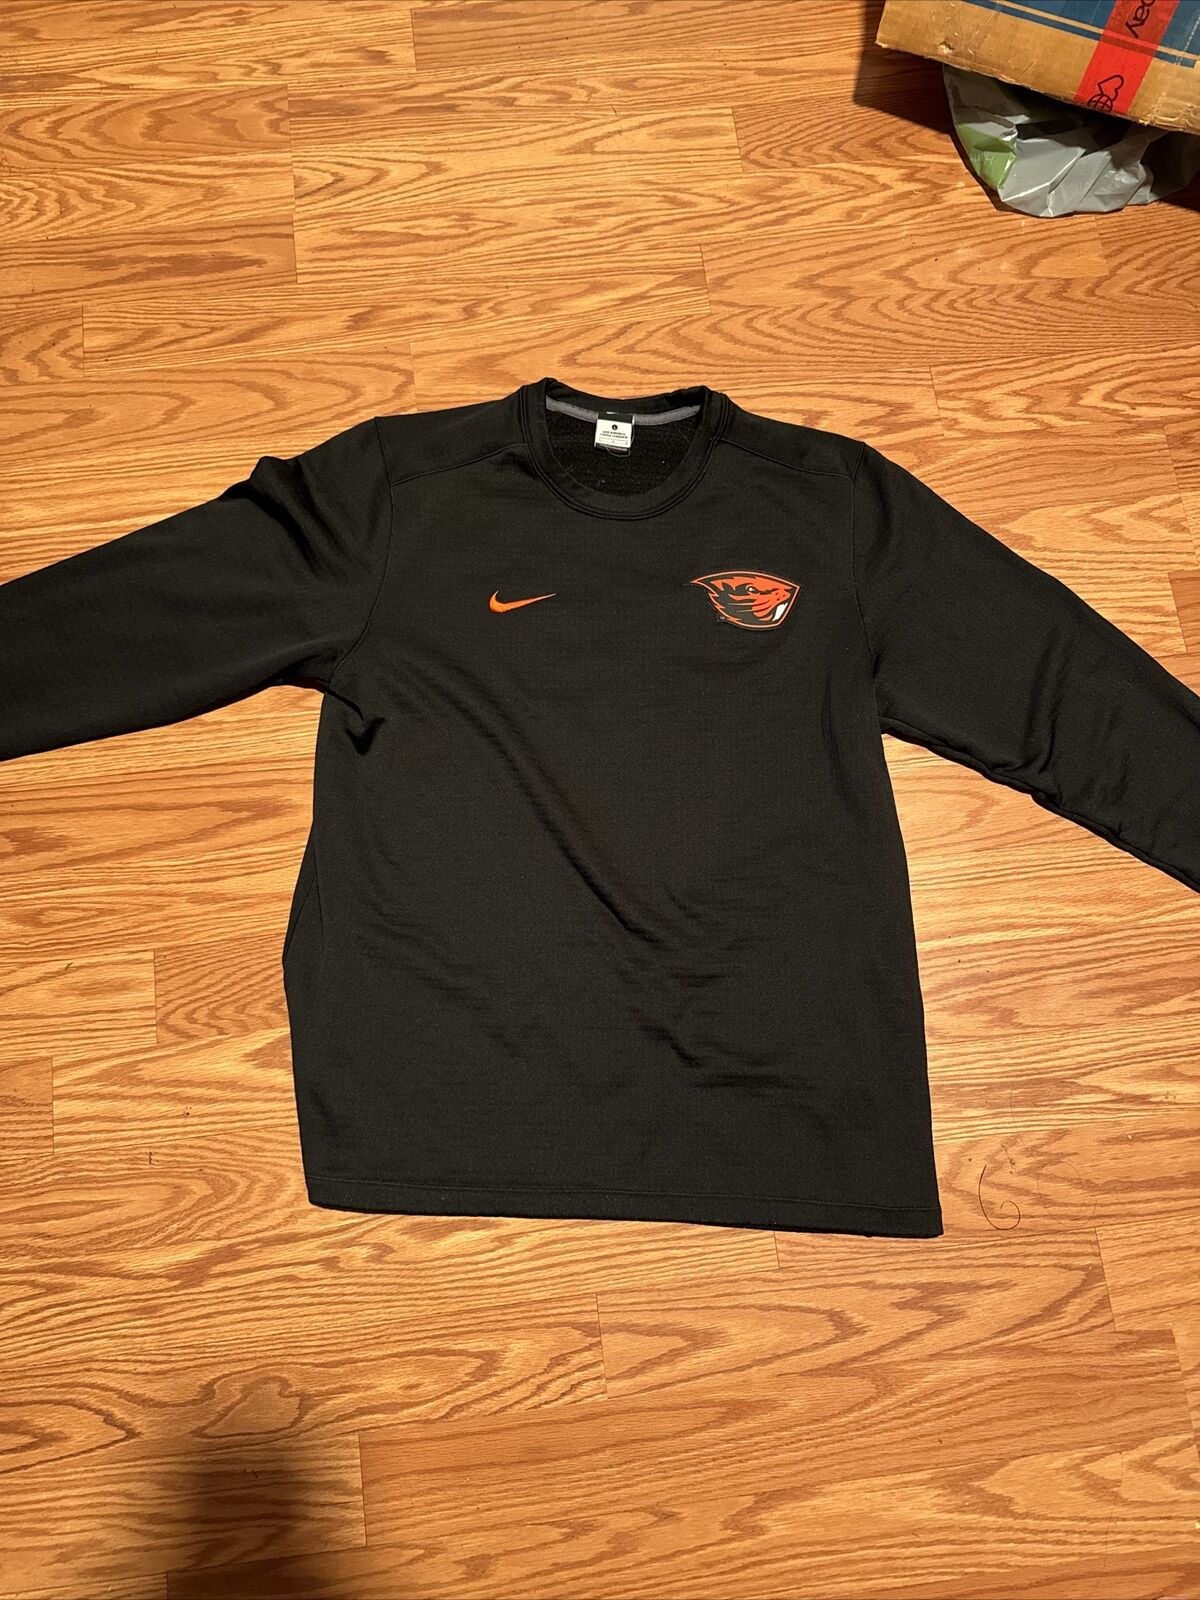 Nike OSU Oregon State Beavers Shirt Mens Large Black Long Sleeve